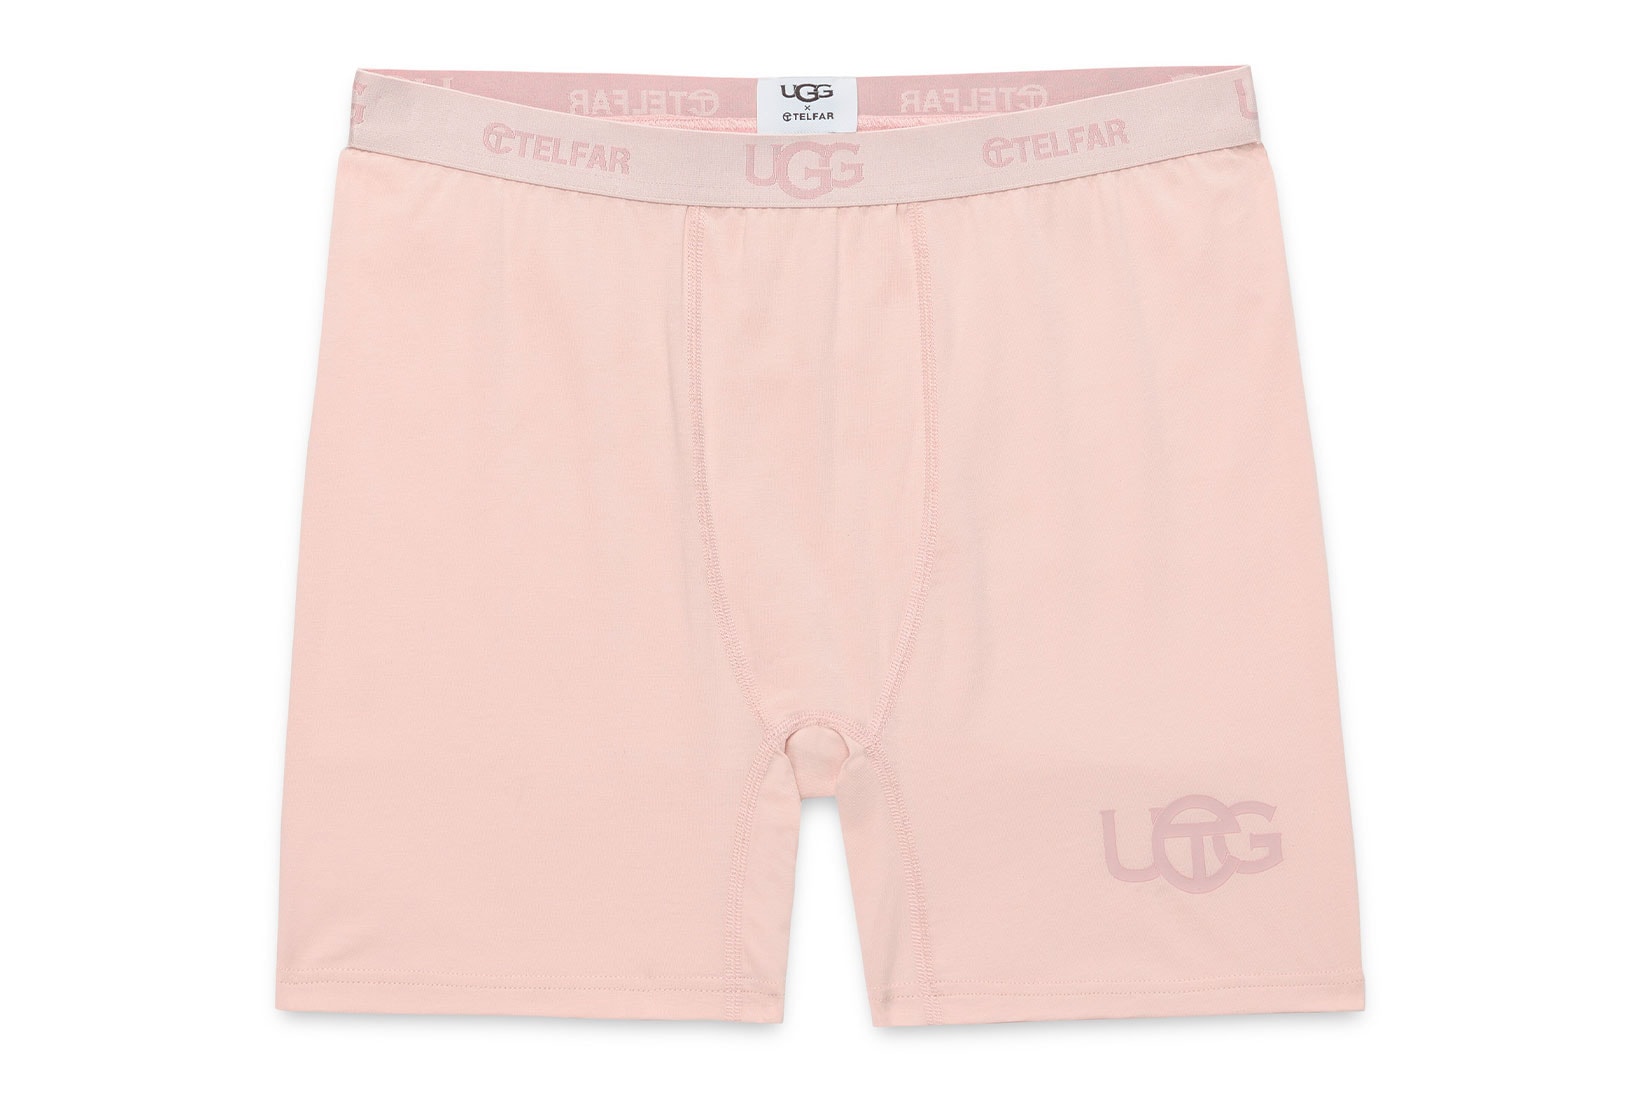 UGG Telfar Fall Winter Collection Pink Underwear Boxer SHorts